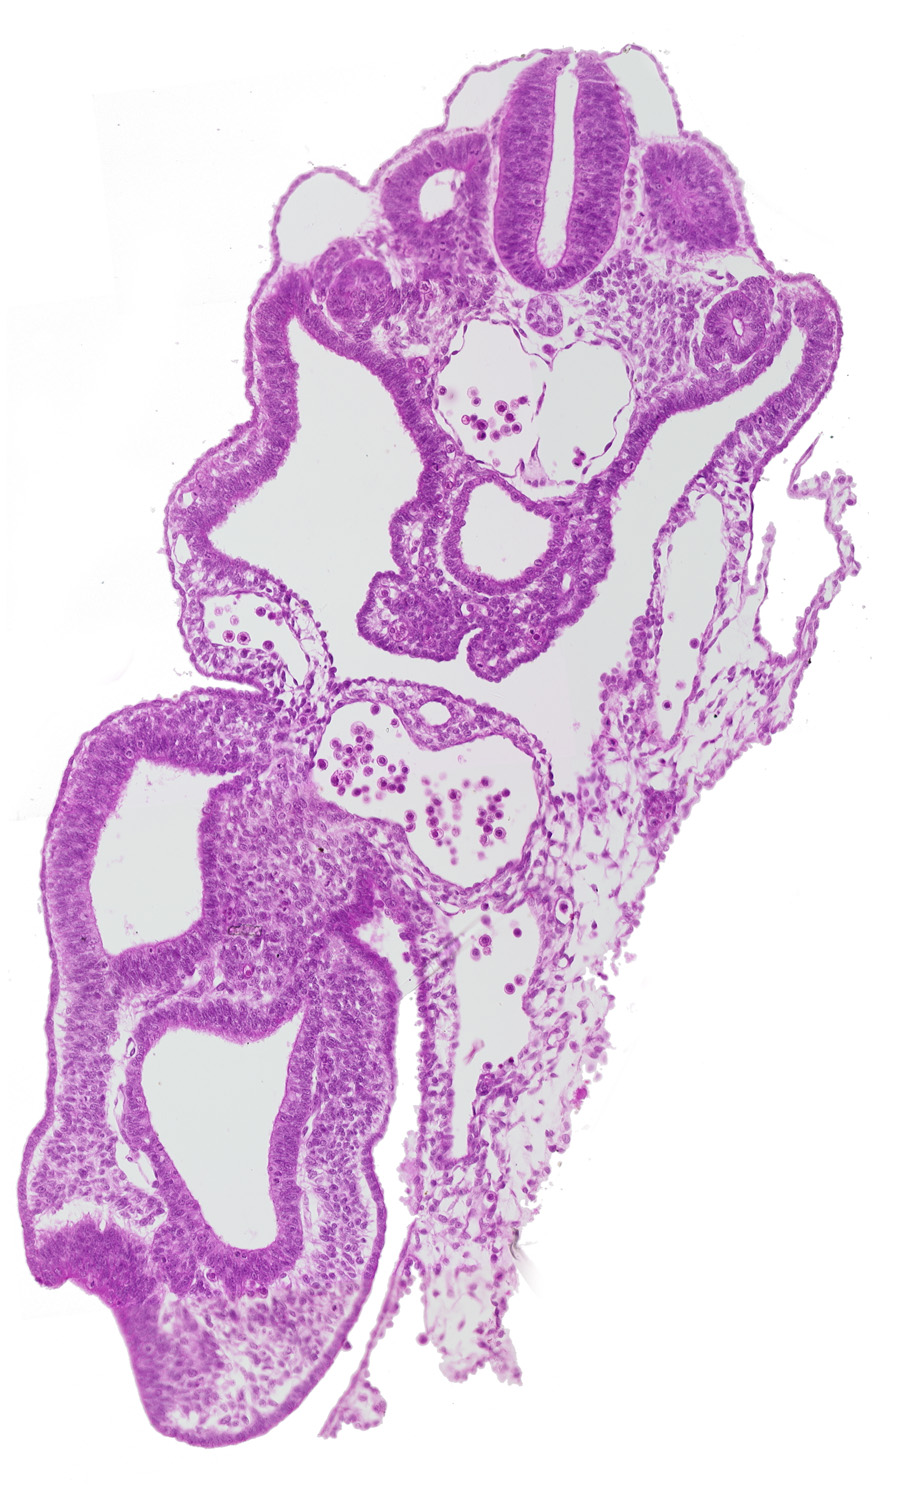 allantois, caudal part of notochord, cloaca, common umbilical artery, dermatomyotome 13 (T-1), hindgut, left umbilical vein, perinotochordal lamina, peritoneal cavity, primordial genital ridge, somatopleuric mesoderm, splanchnopleuric mesoderm